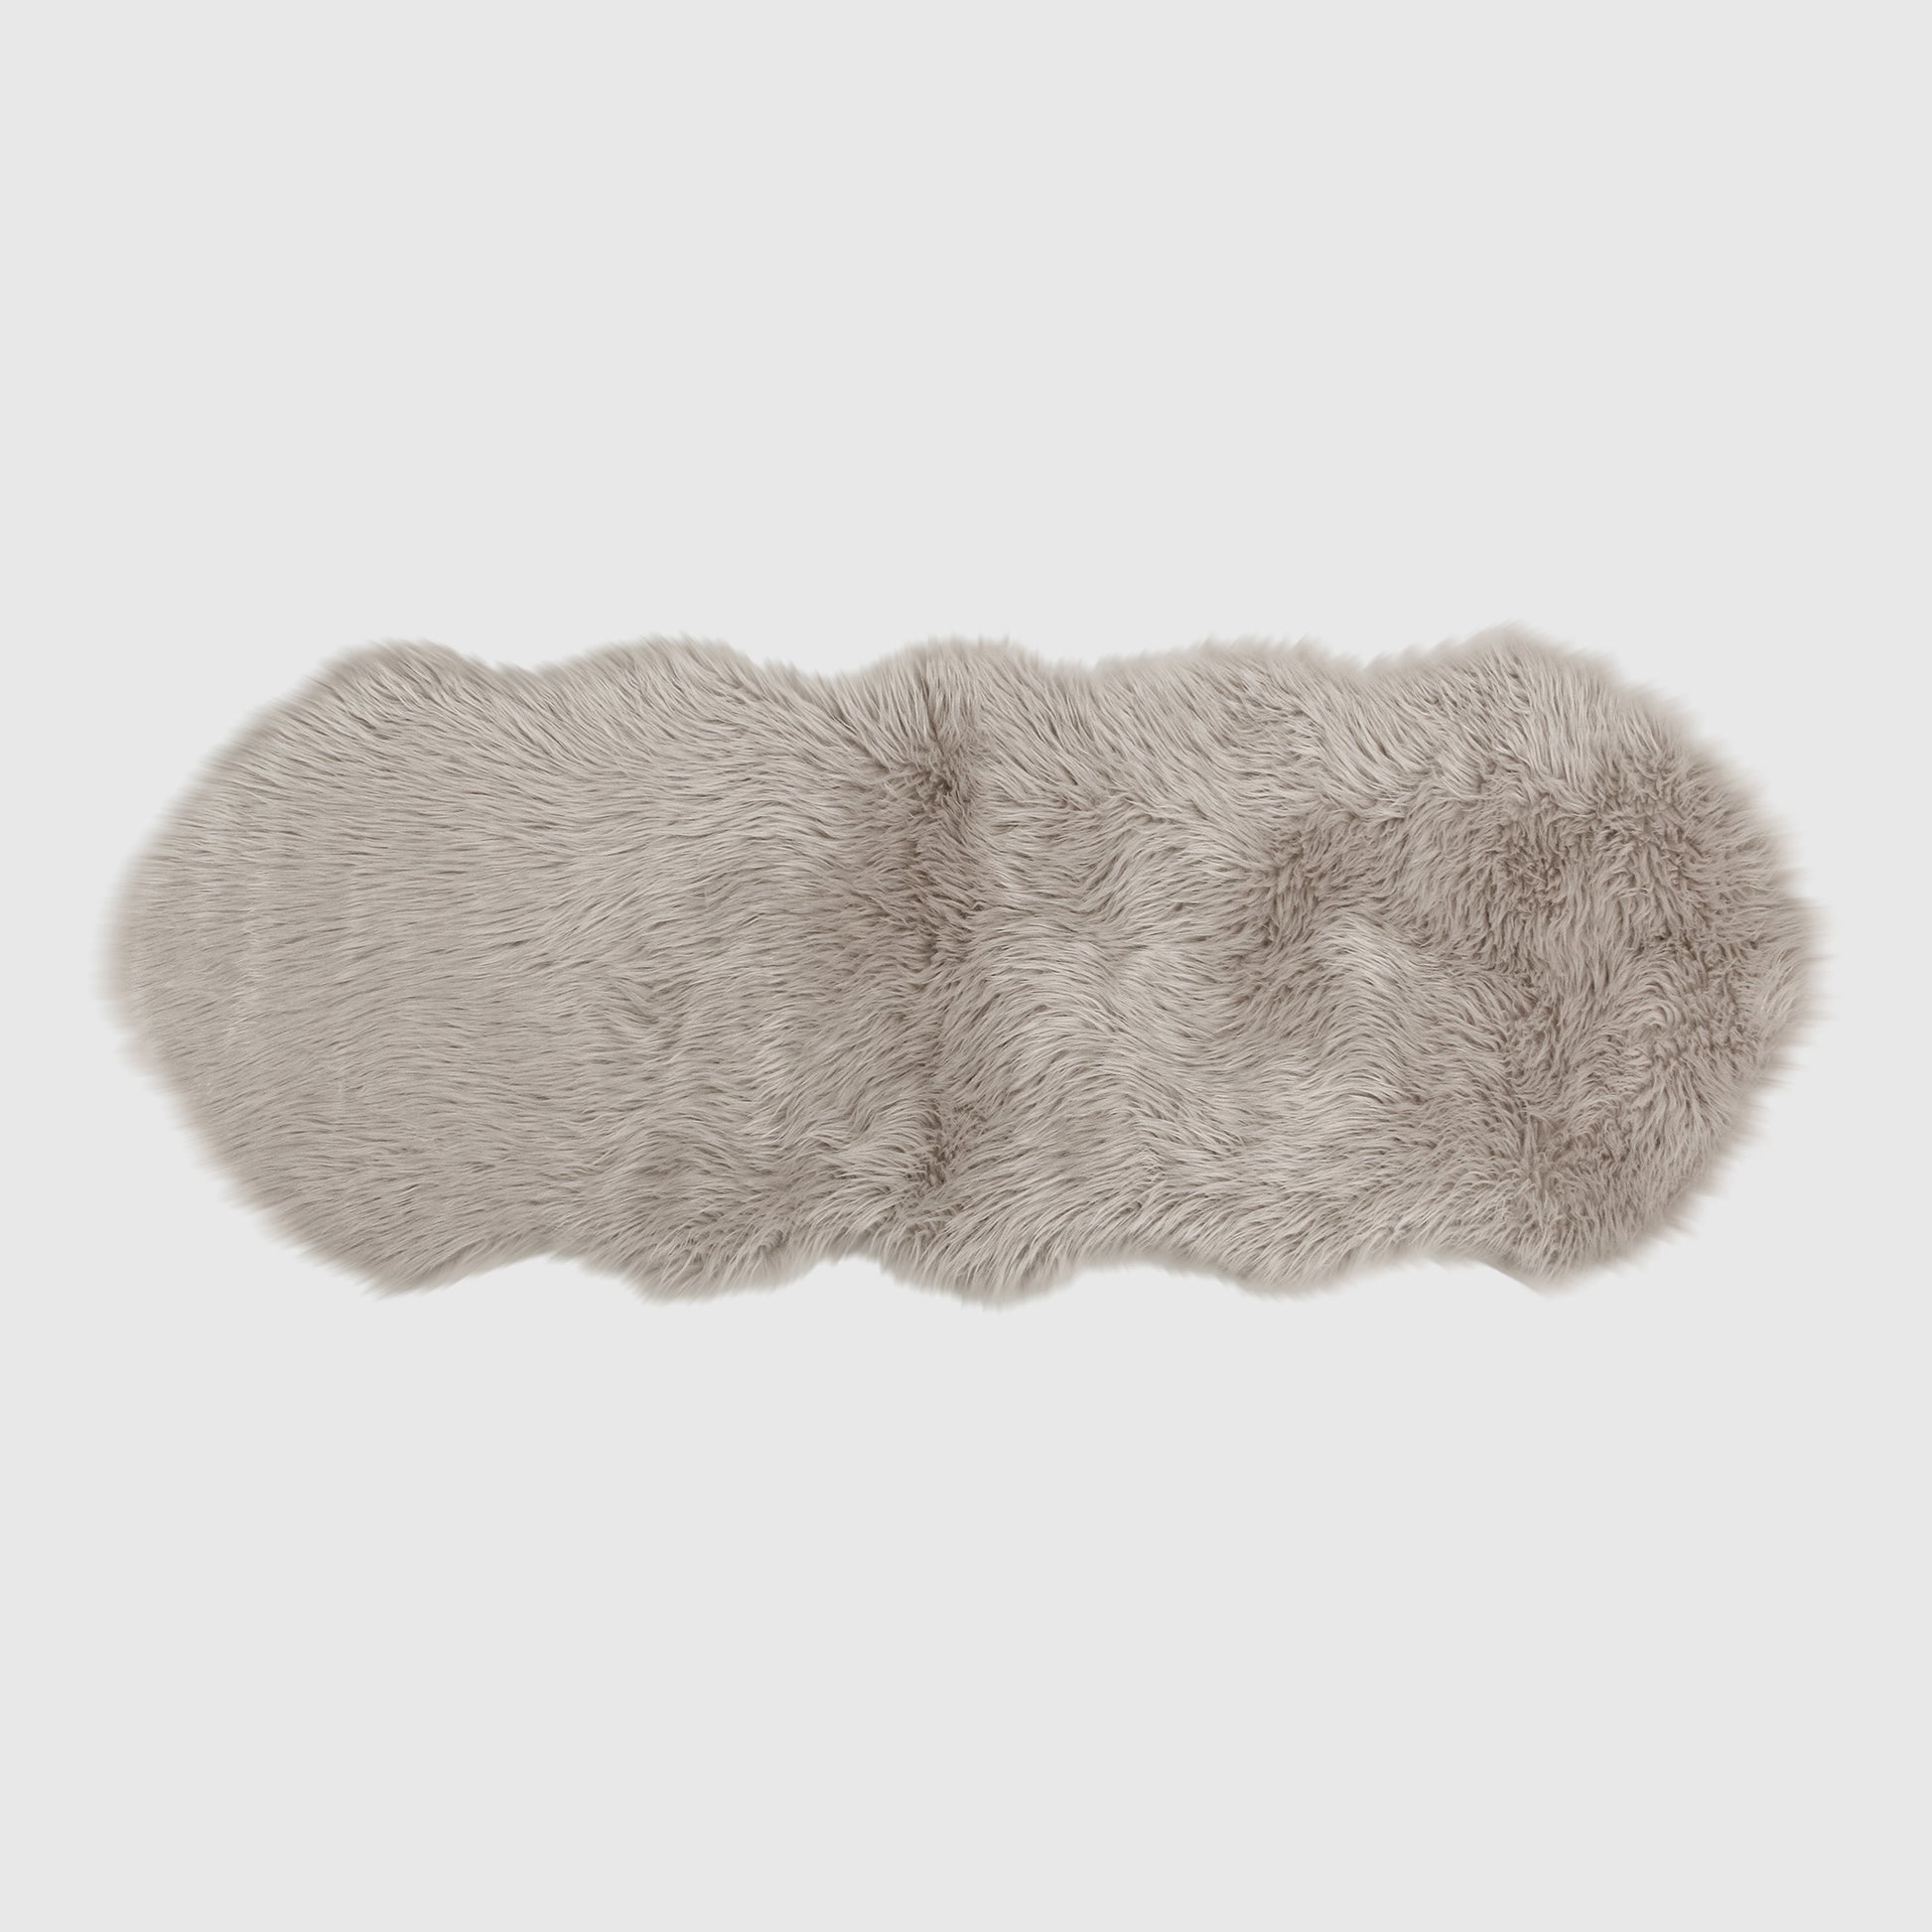 The Mood | Harris Faux Fur 2'x5' Rug, Chateau Gray